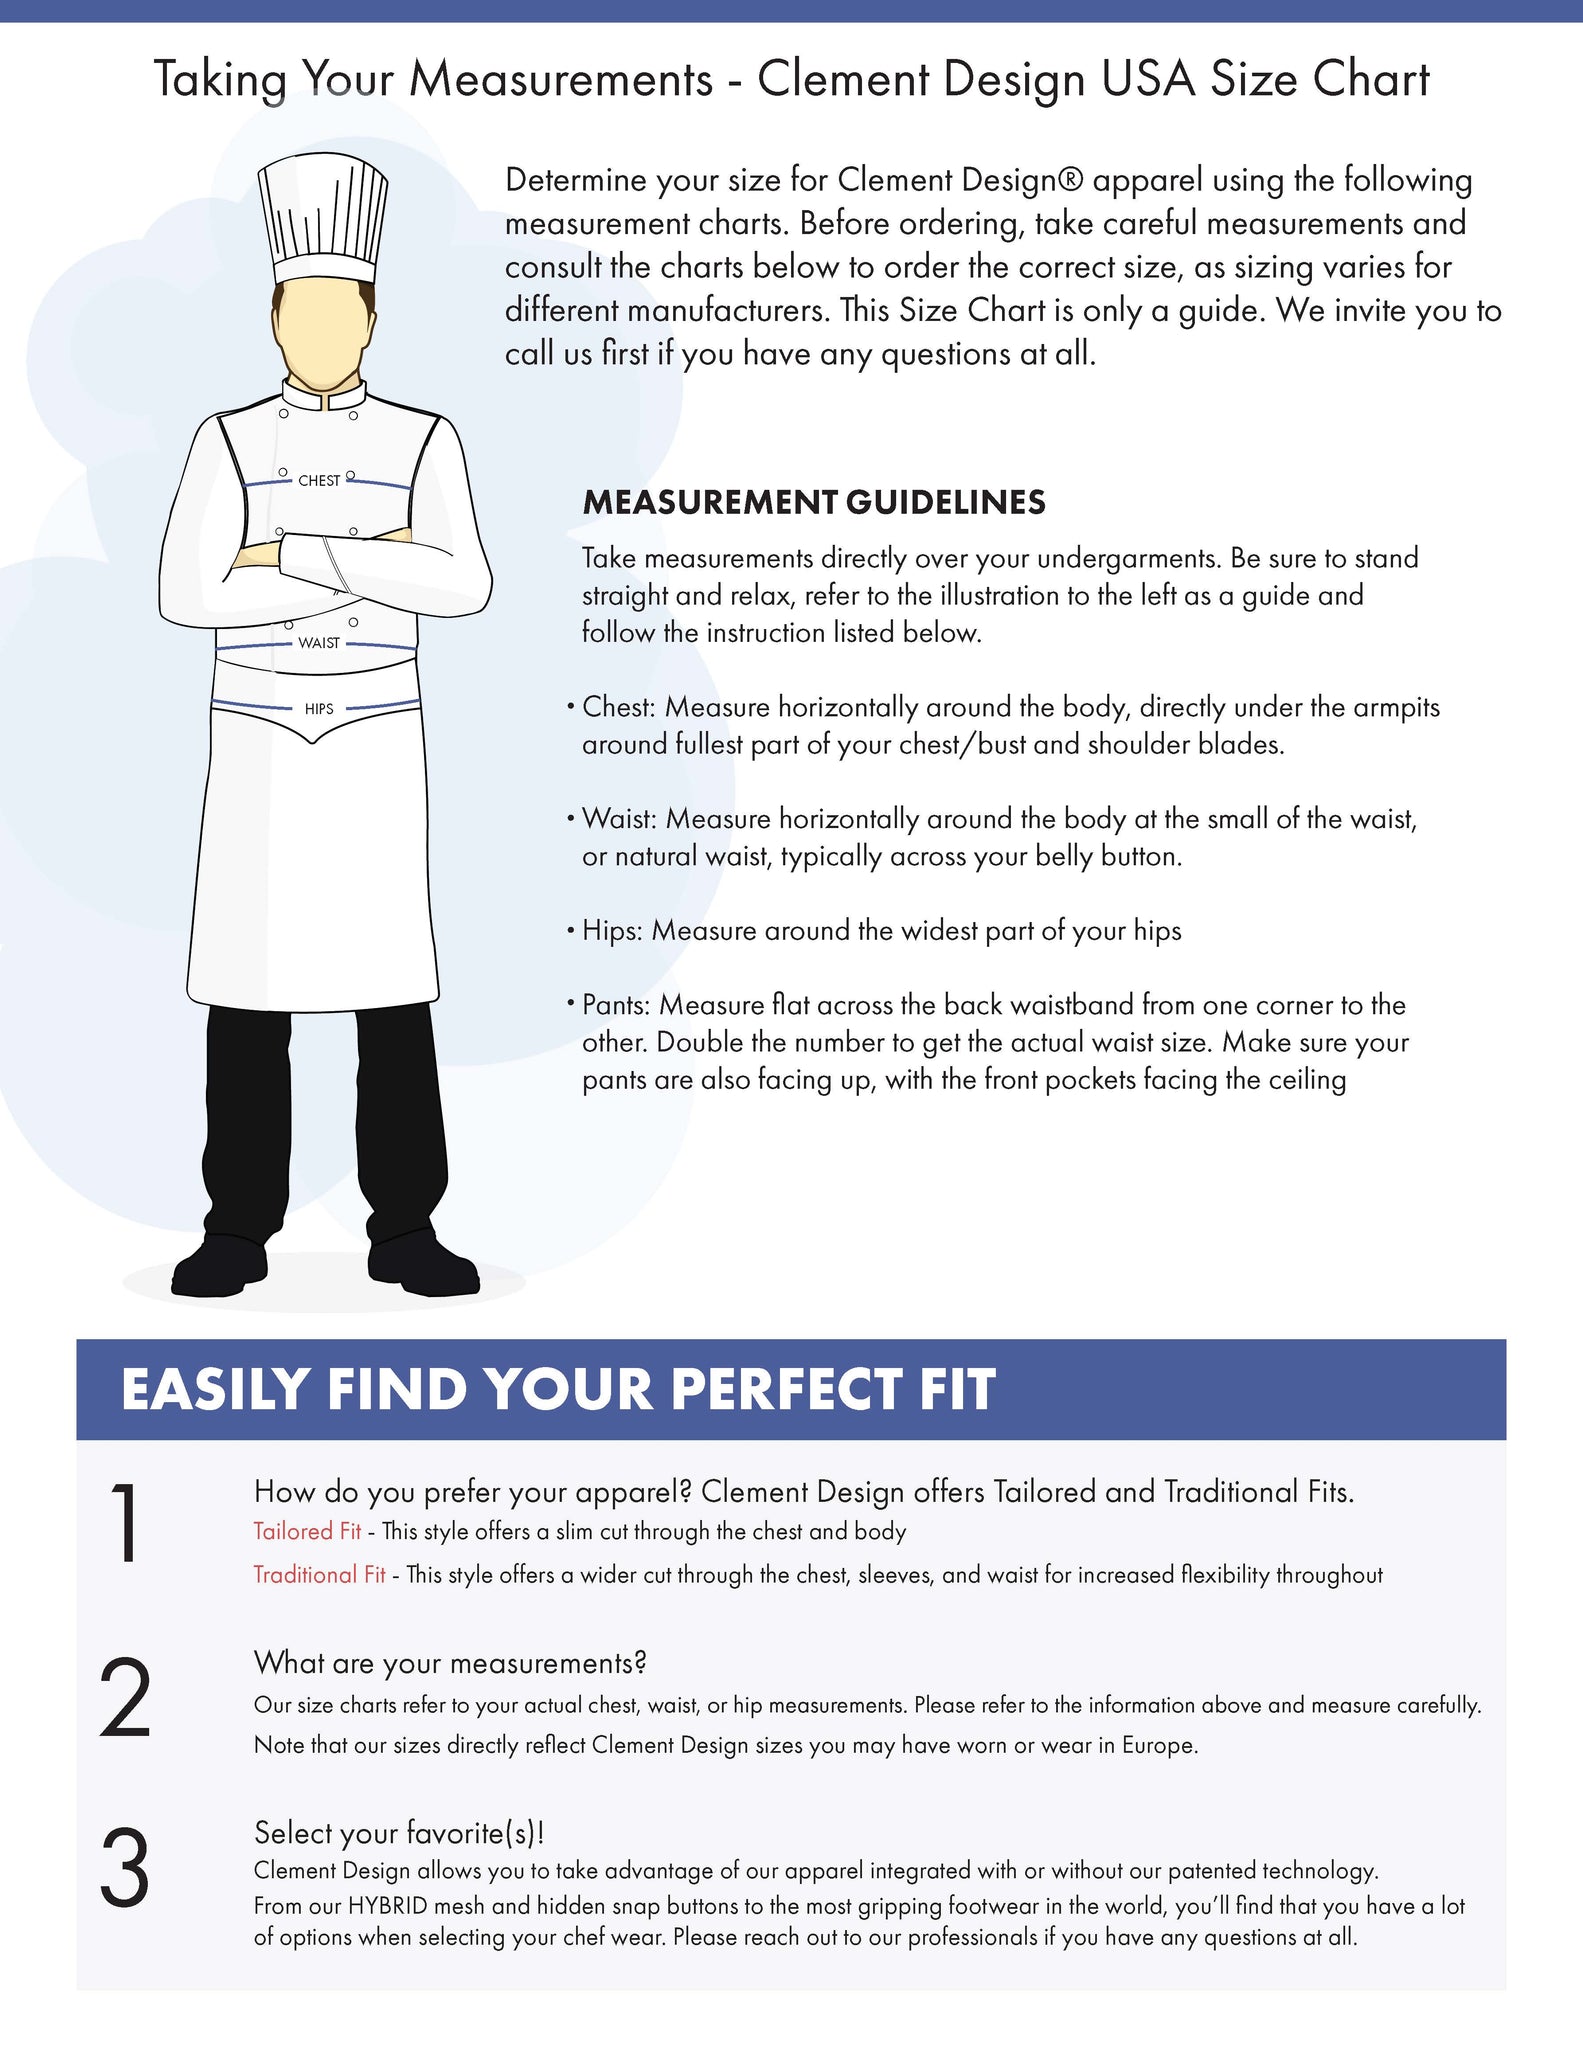 clement design usa best chef jacket size chart